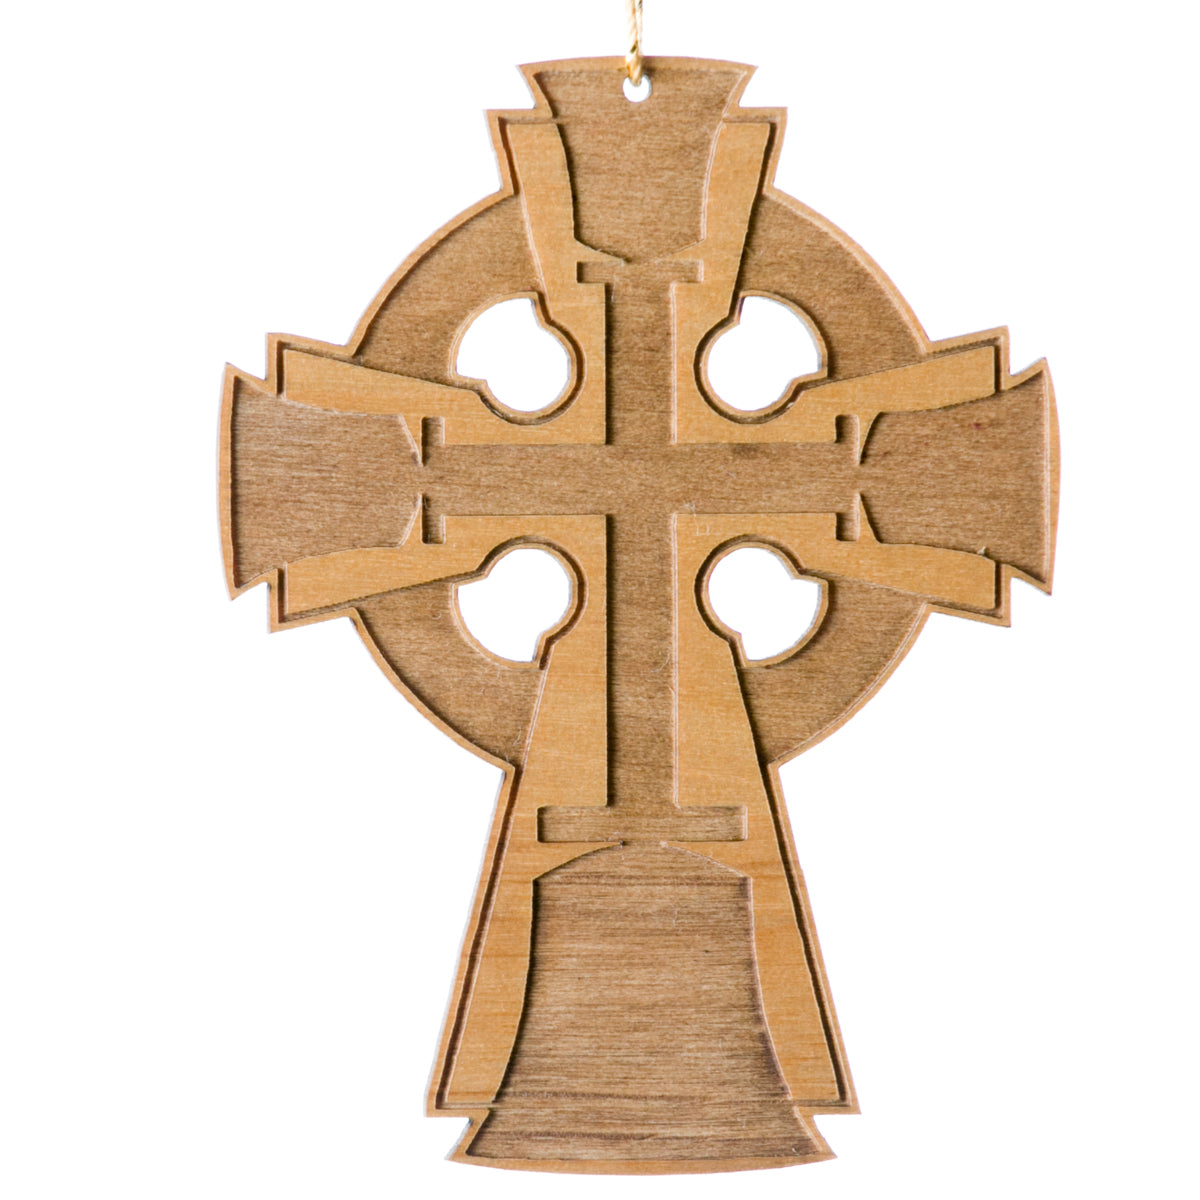 Wooden Ornament - cross